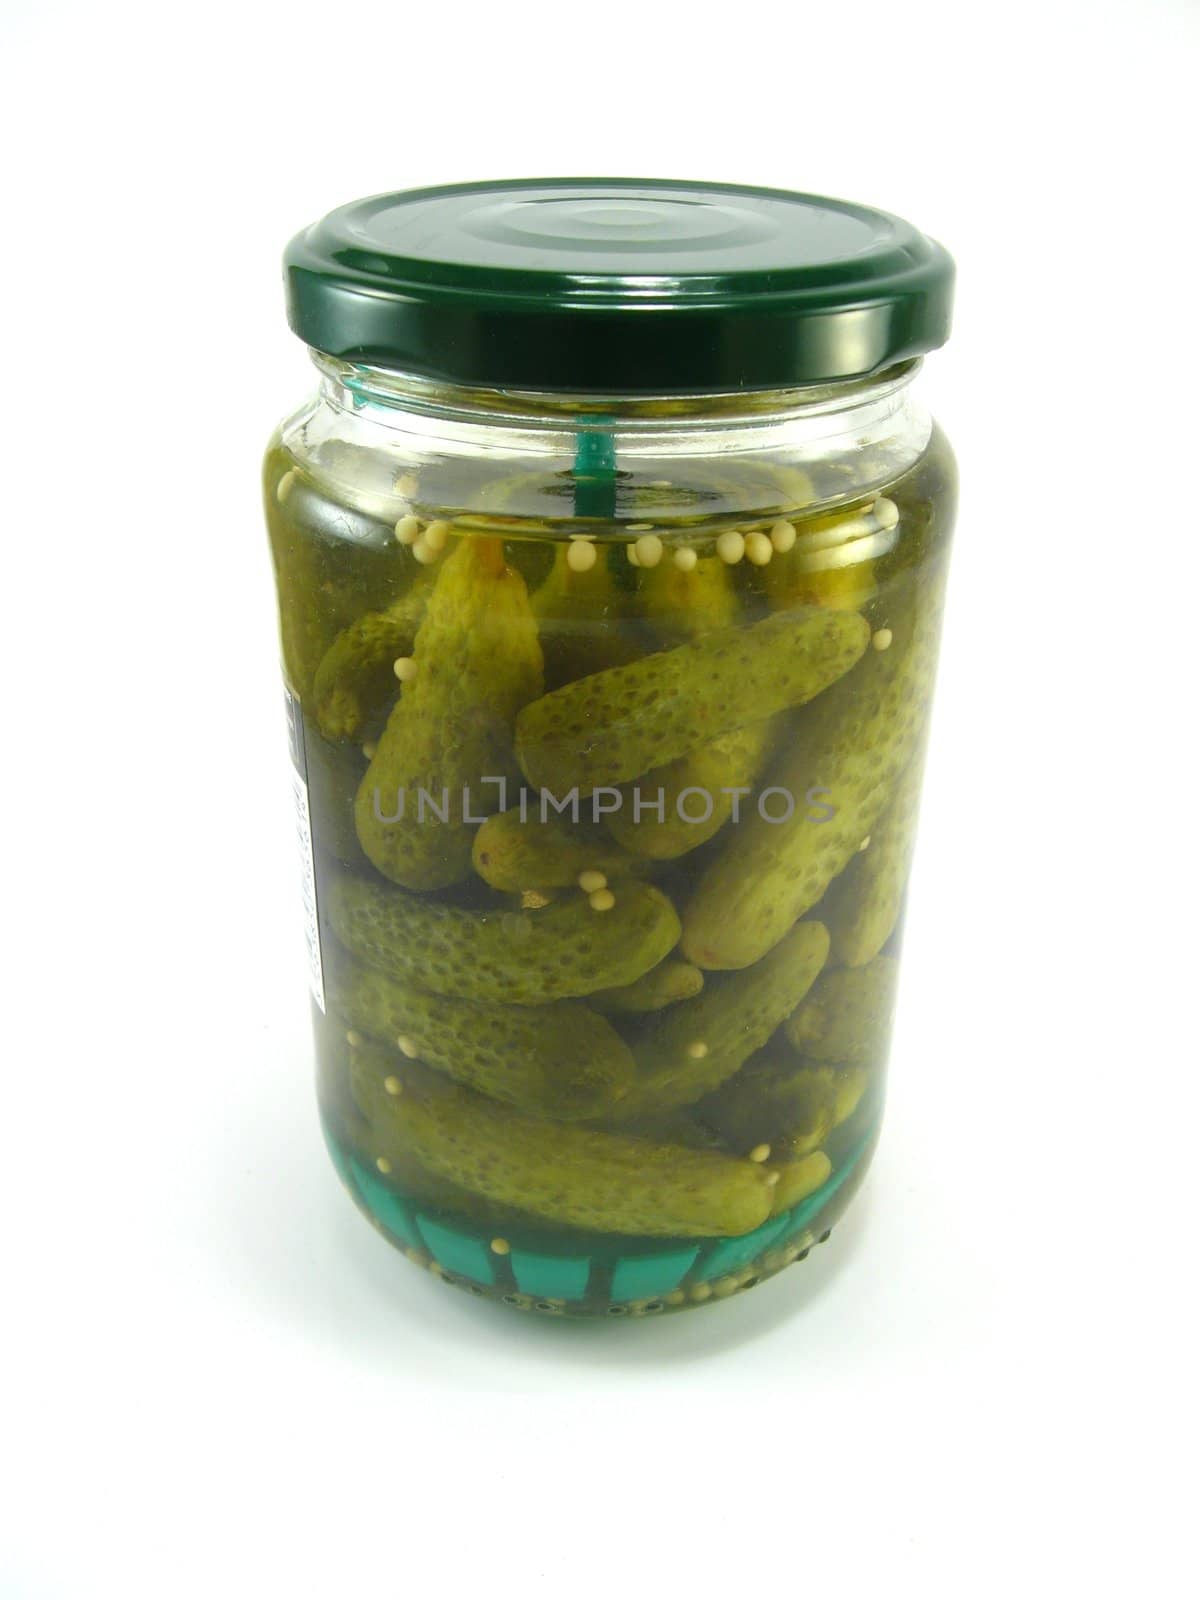 a jar of jerkins on a white background